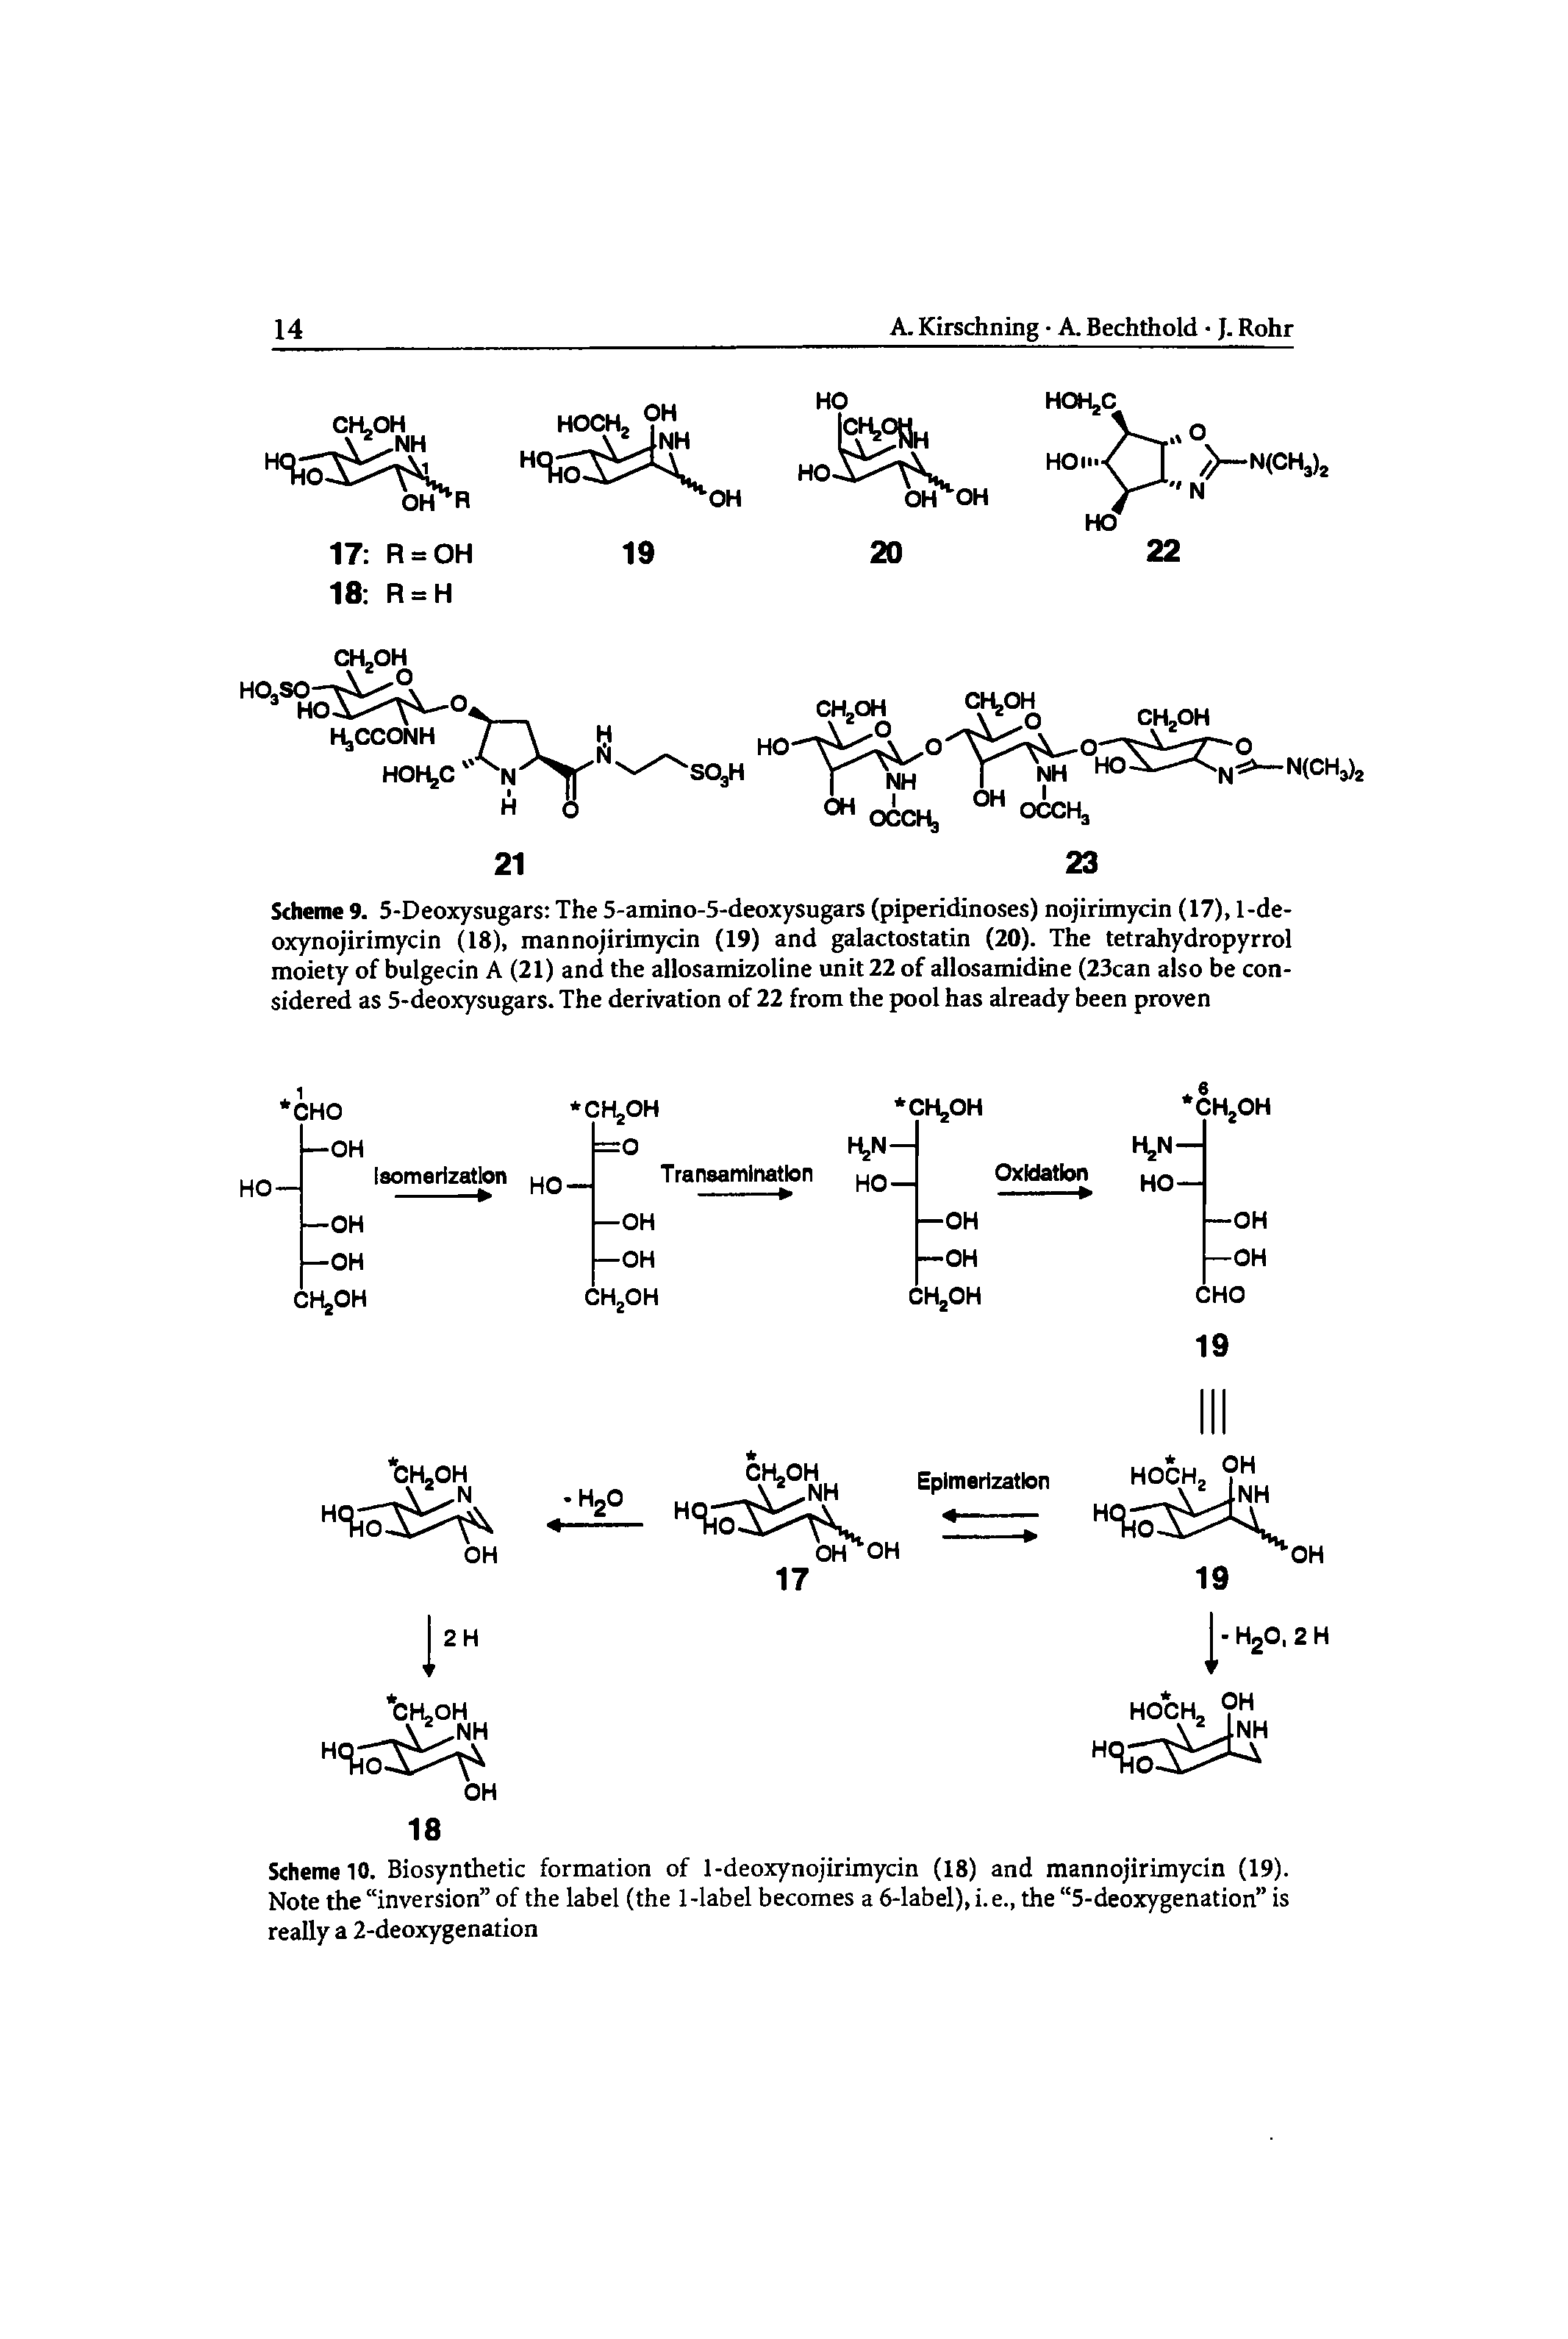 Scheme 9. 5-Deoxysugars The 5-amino-5-deoxysugars (piperidinoses) nojirimycin (17), 1-de-oxynojirimycin (18), mannojirimycin (19) and galactostatin (20). The tetrahydropyrrol moiety of bulgecin A (21) and the allosamizoline unit 22 of allosamidine (23can also be considered as 5-deoxysugars. The derivation of 22 from the pool has already been proven...